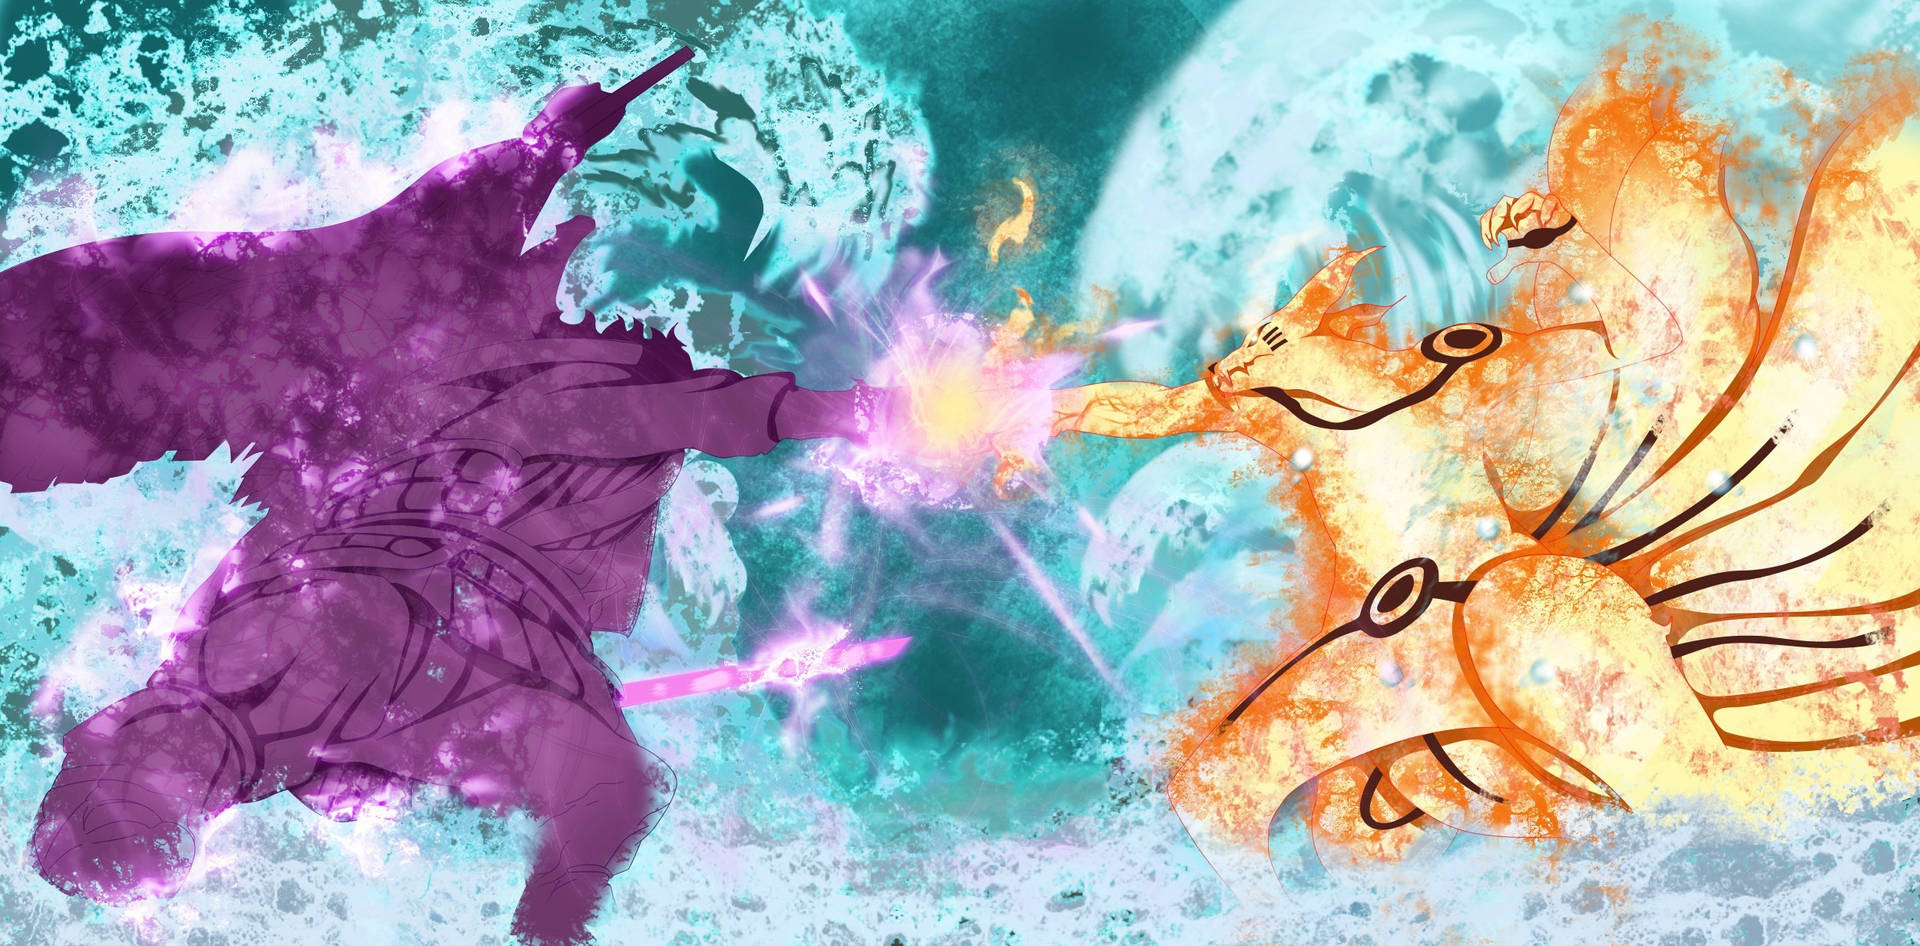 Sasuke Rinnegan Wallpaper 4K, Sasuke Uchiha, Naruto